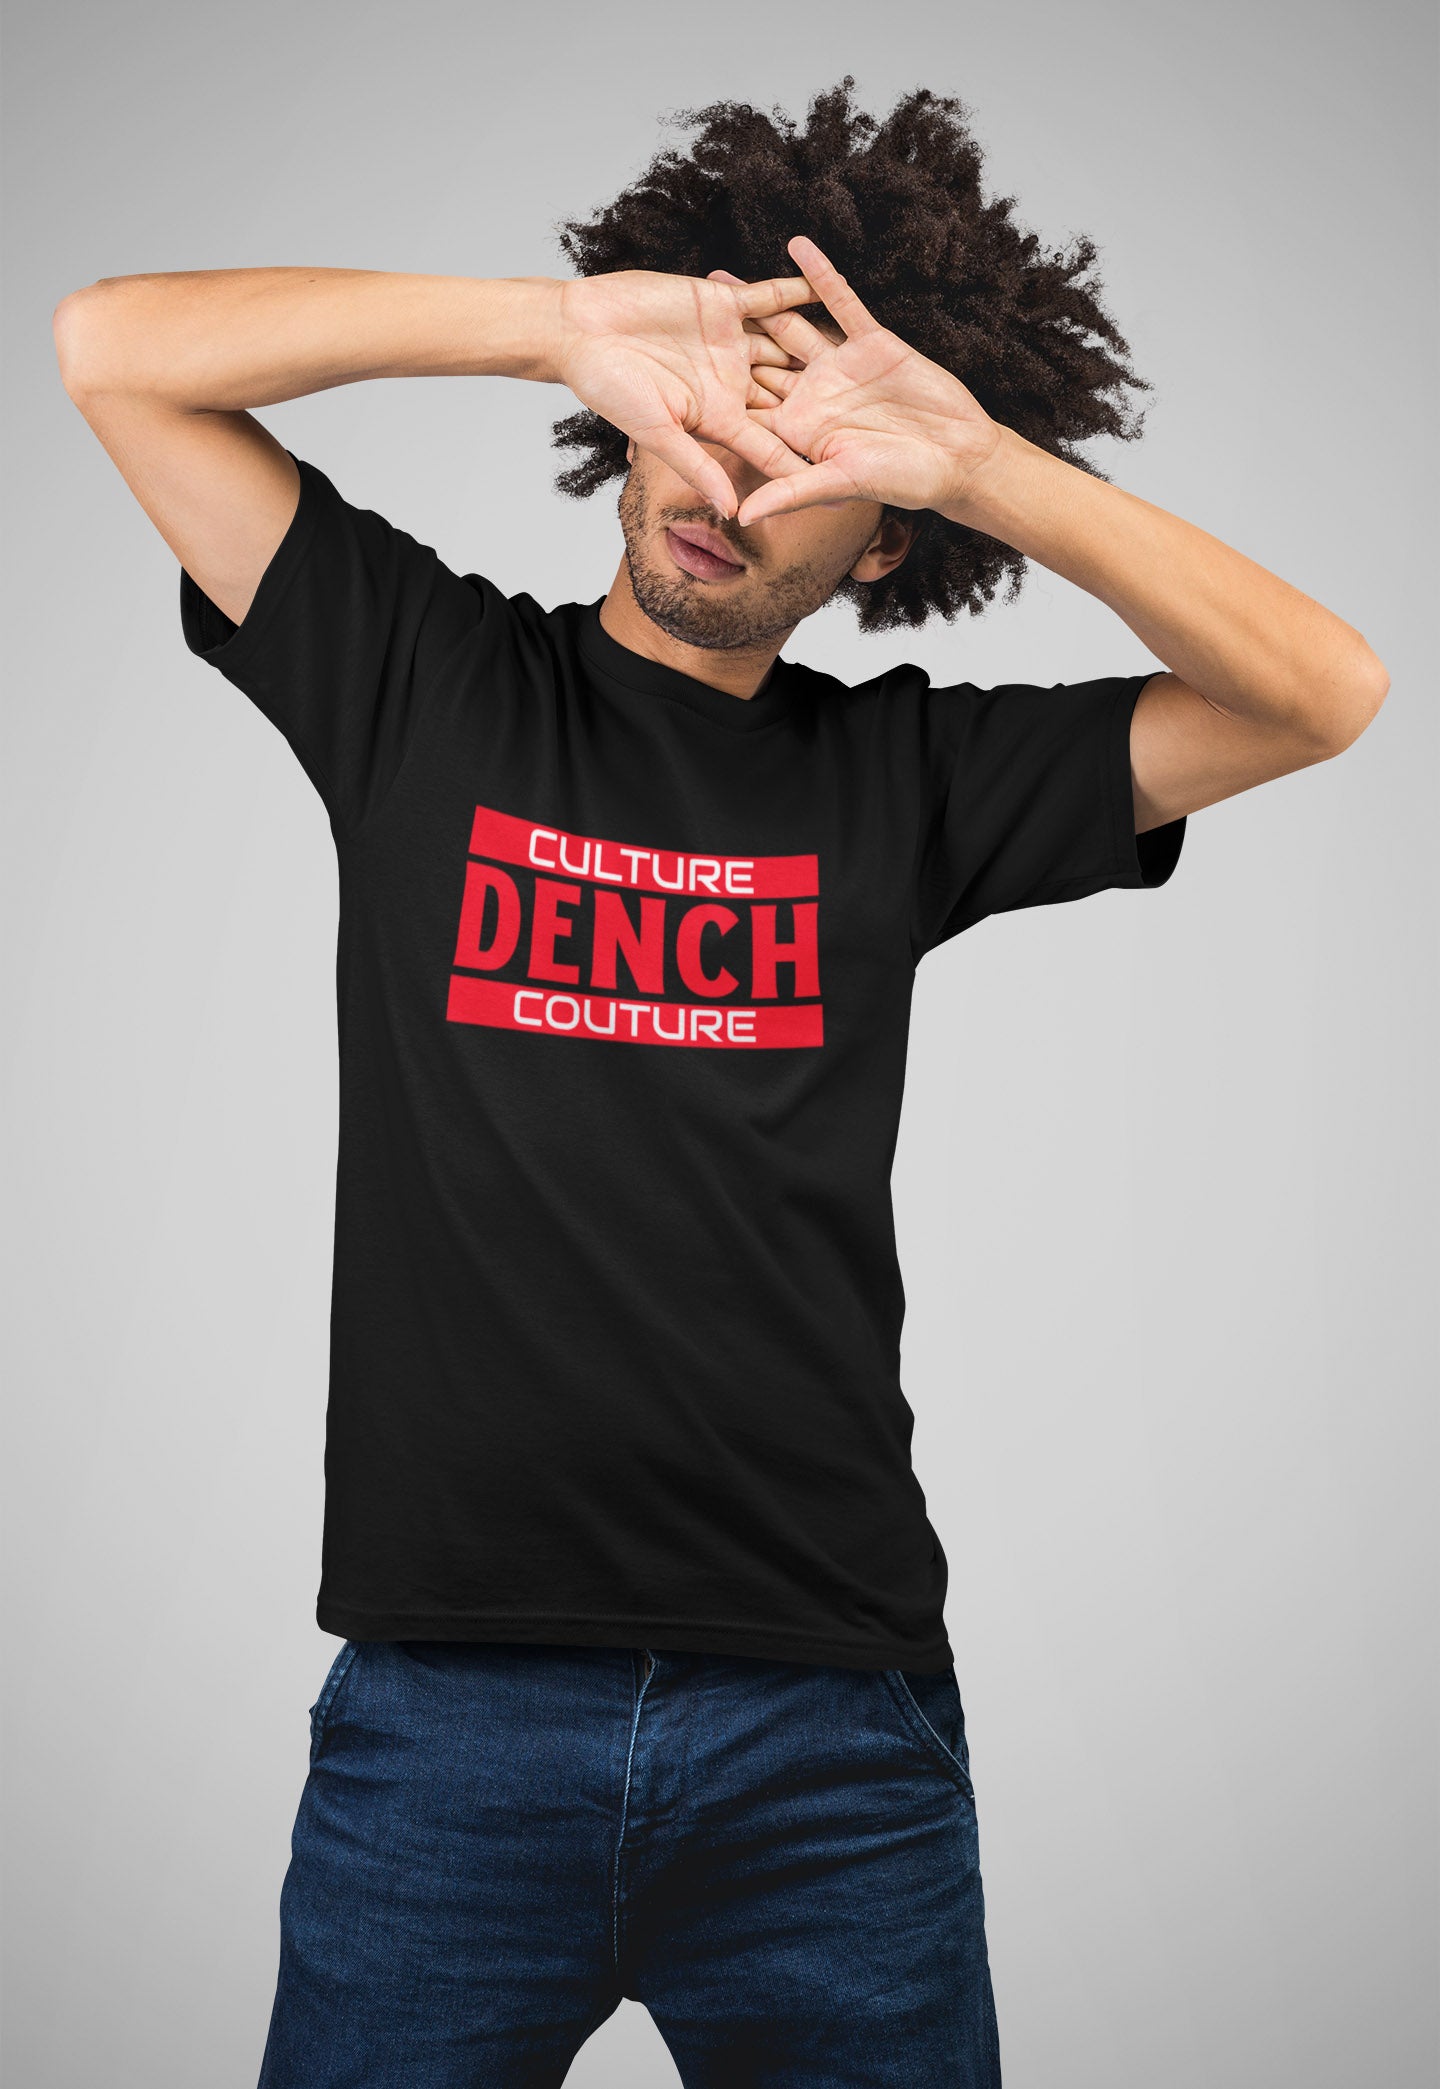 Dench T-Shirt/Black